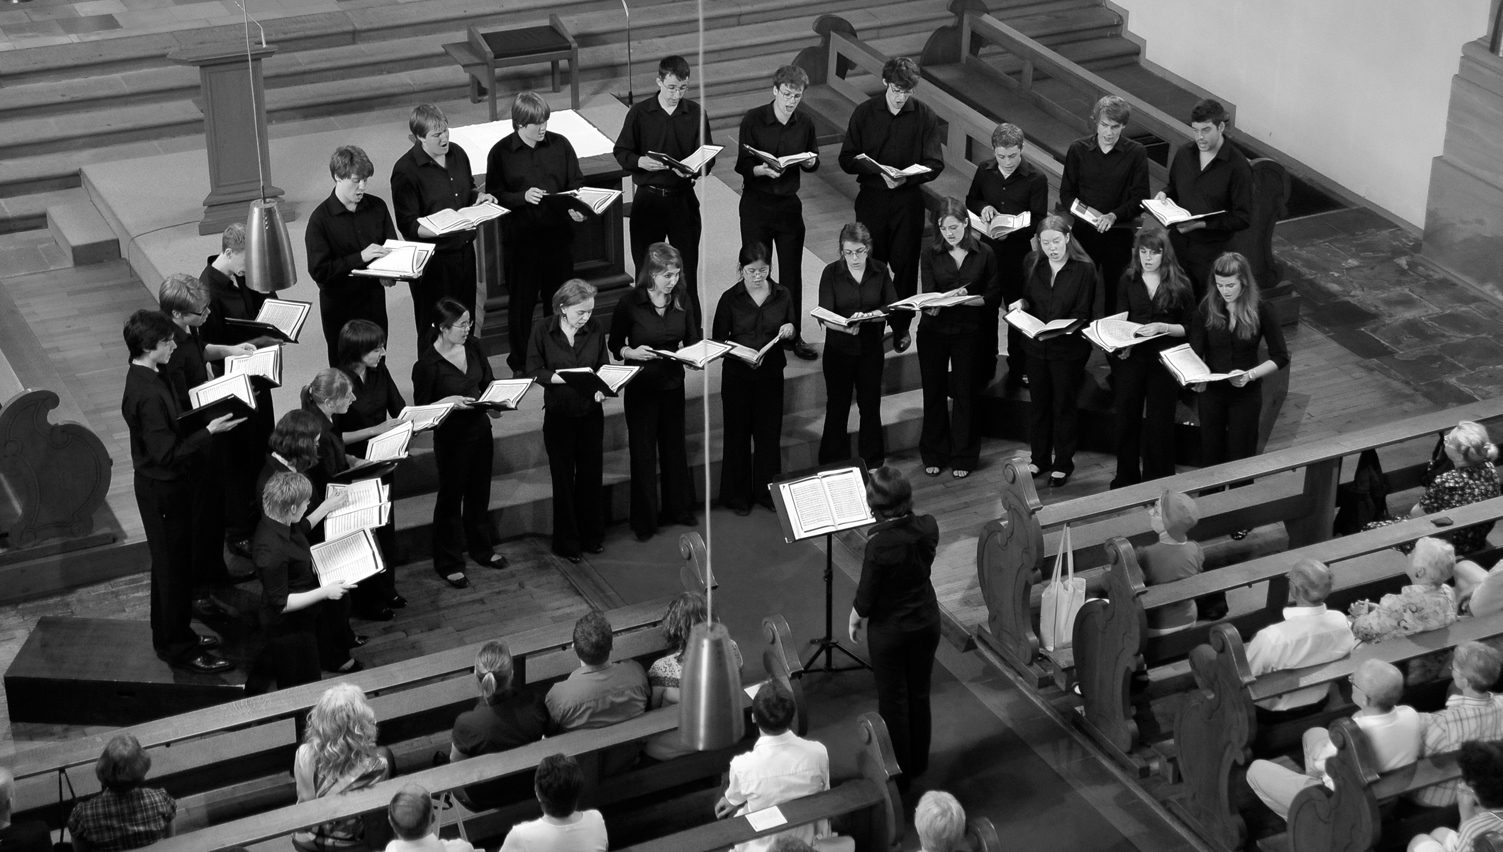 Christ's College Choir on Tour